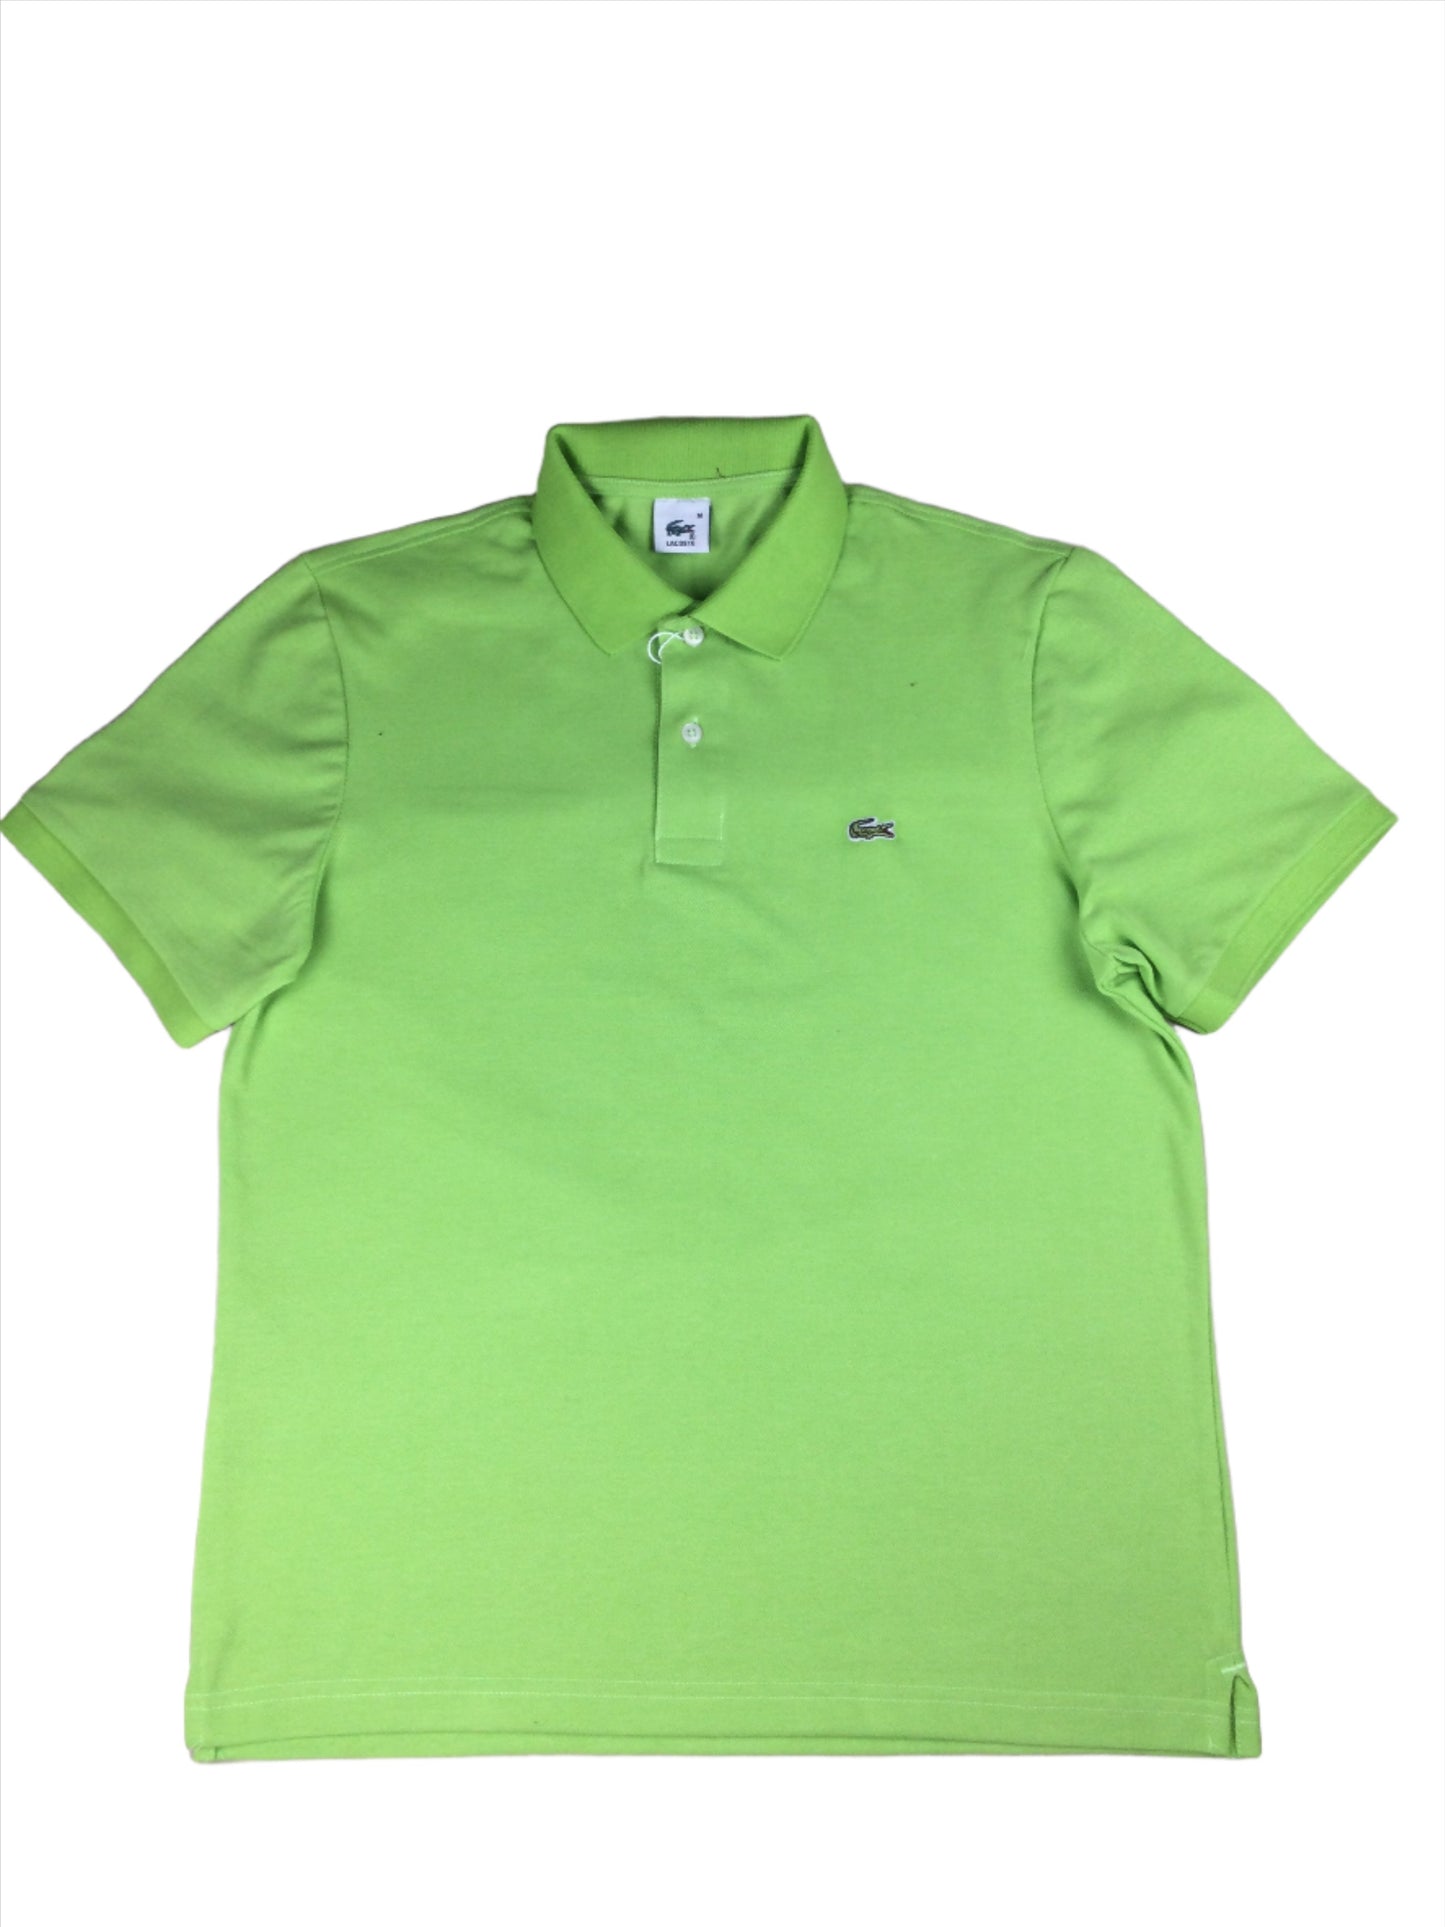 Light Green Lacoste shirt egyptian made cotton